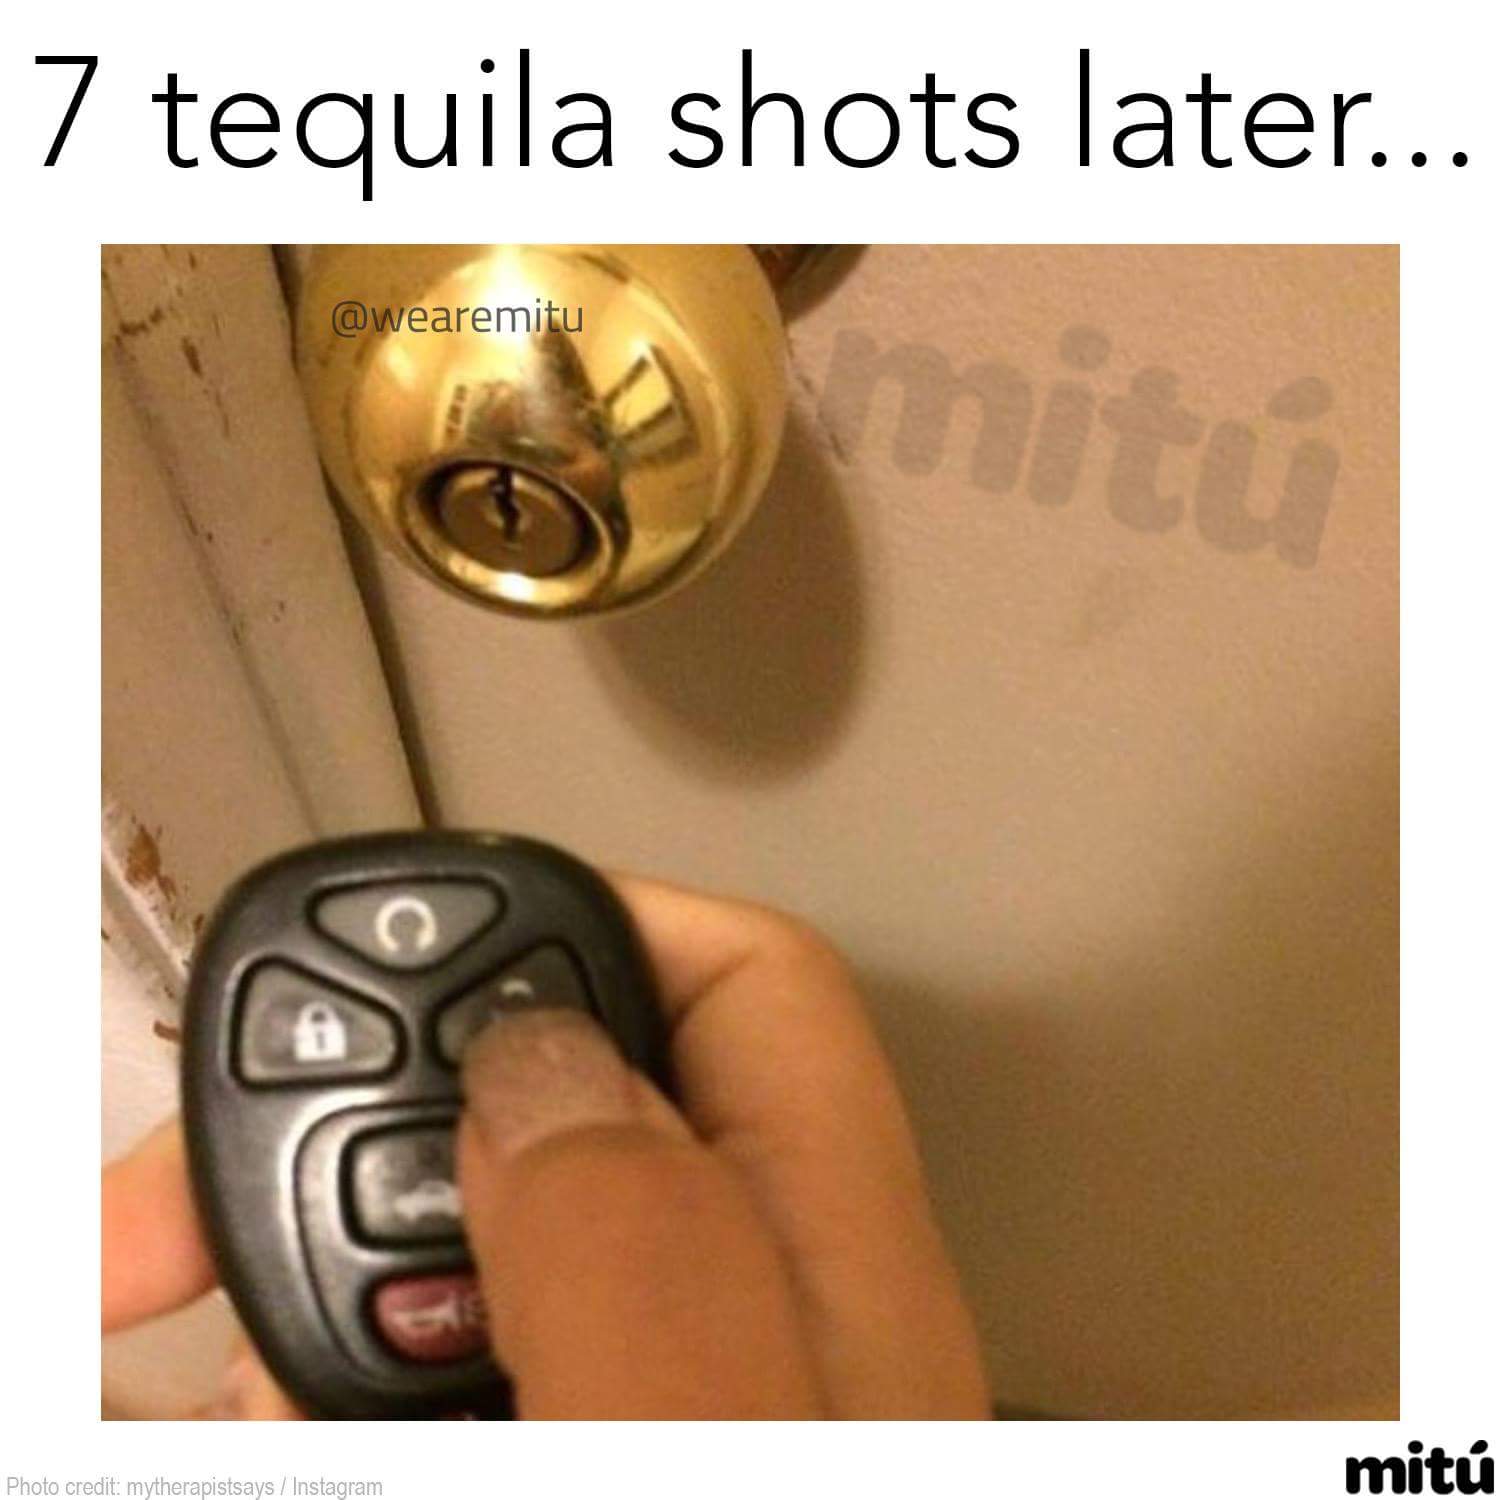 tweet - tequila shots meme - 7 tequila shots later.. mit Photo credit mytherapistsays Instagram